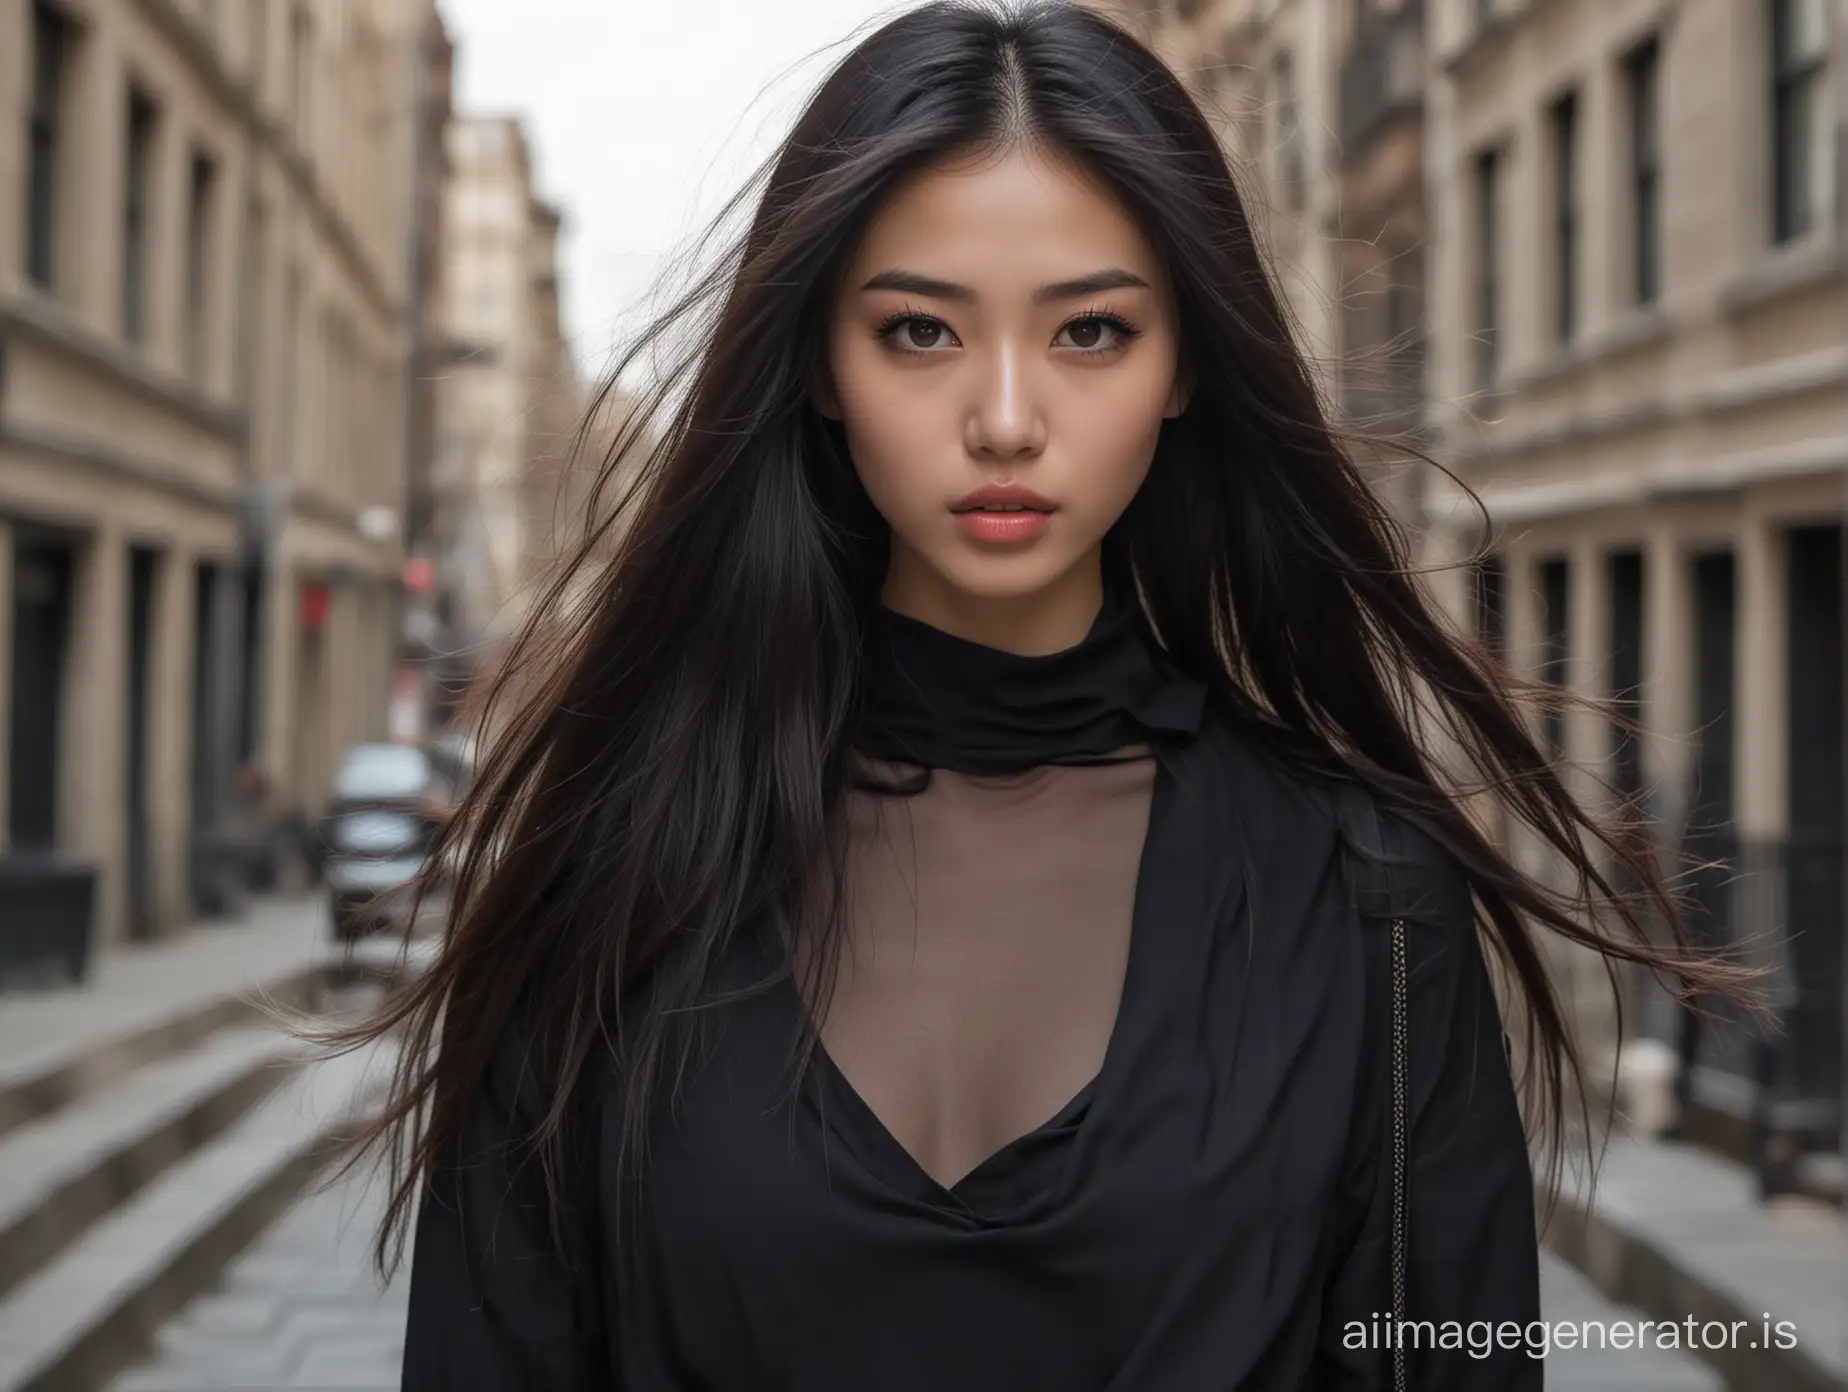 Beautiful-Oriental-Fashion-Model-with-Dark-Nighttime-Portrait-in-Black-Clothes